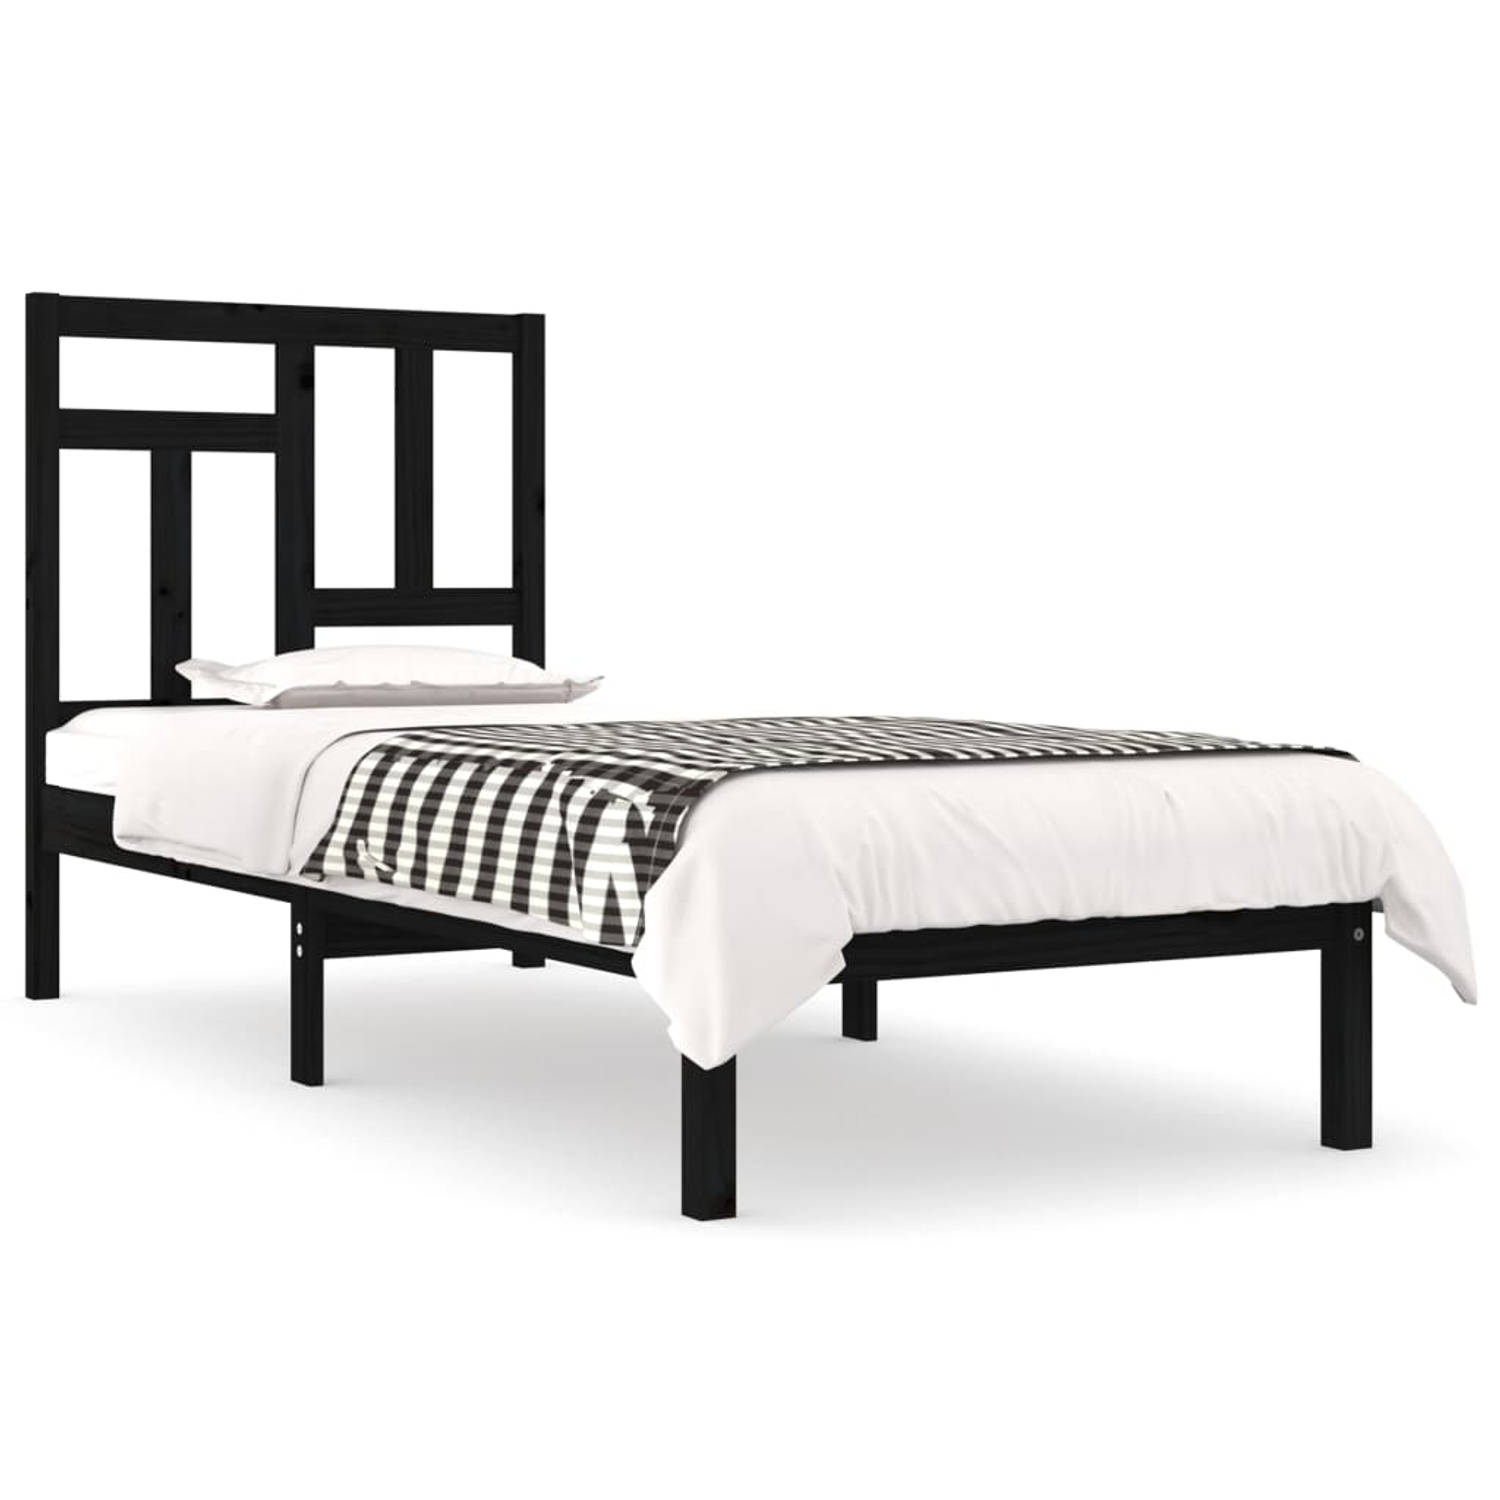 The Living Store Bedframe massief hout zwart 75x190 cm 2FT6 Small Single - Bedframe - Bedframe - Eenpersoonsbed - Bed - Ledikant - Bedomranding - Houten Bedframe - Platformbed - Be